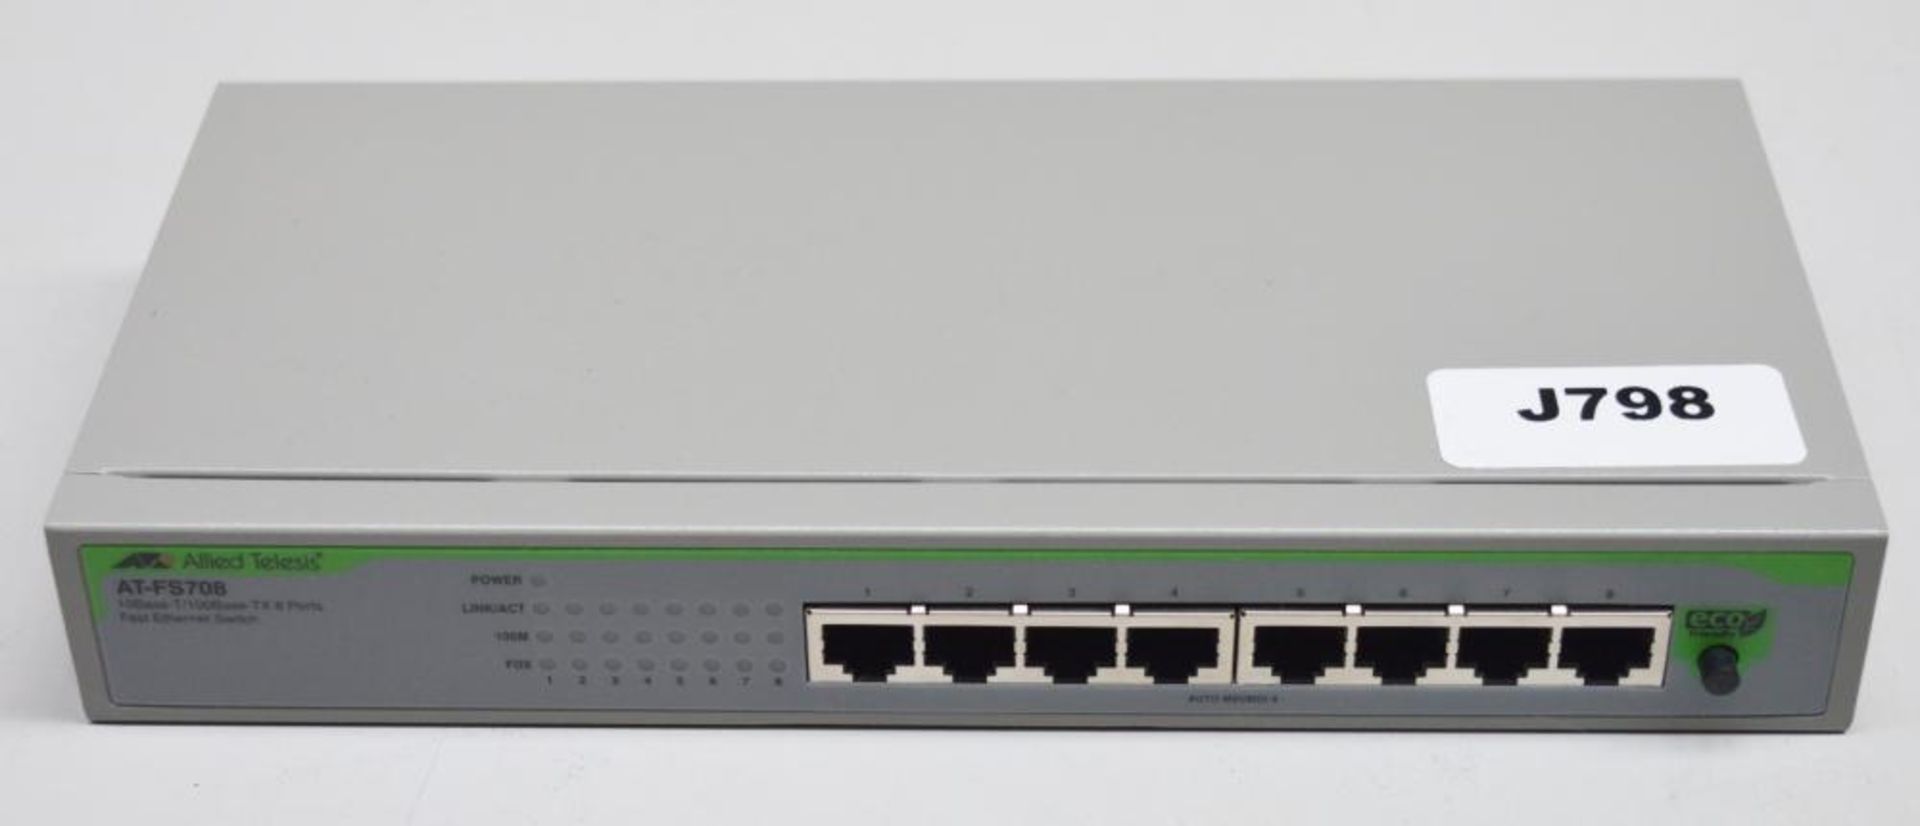 1 x Allied Telesis AT-FS708 Unmanaged Ethernet Switch - CL285 - Ref J798 - Location: Altrincham WA14